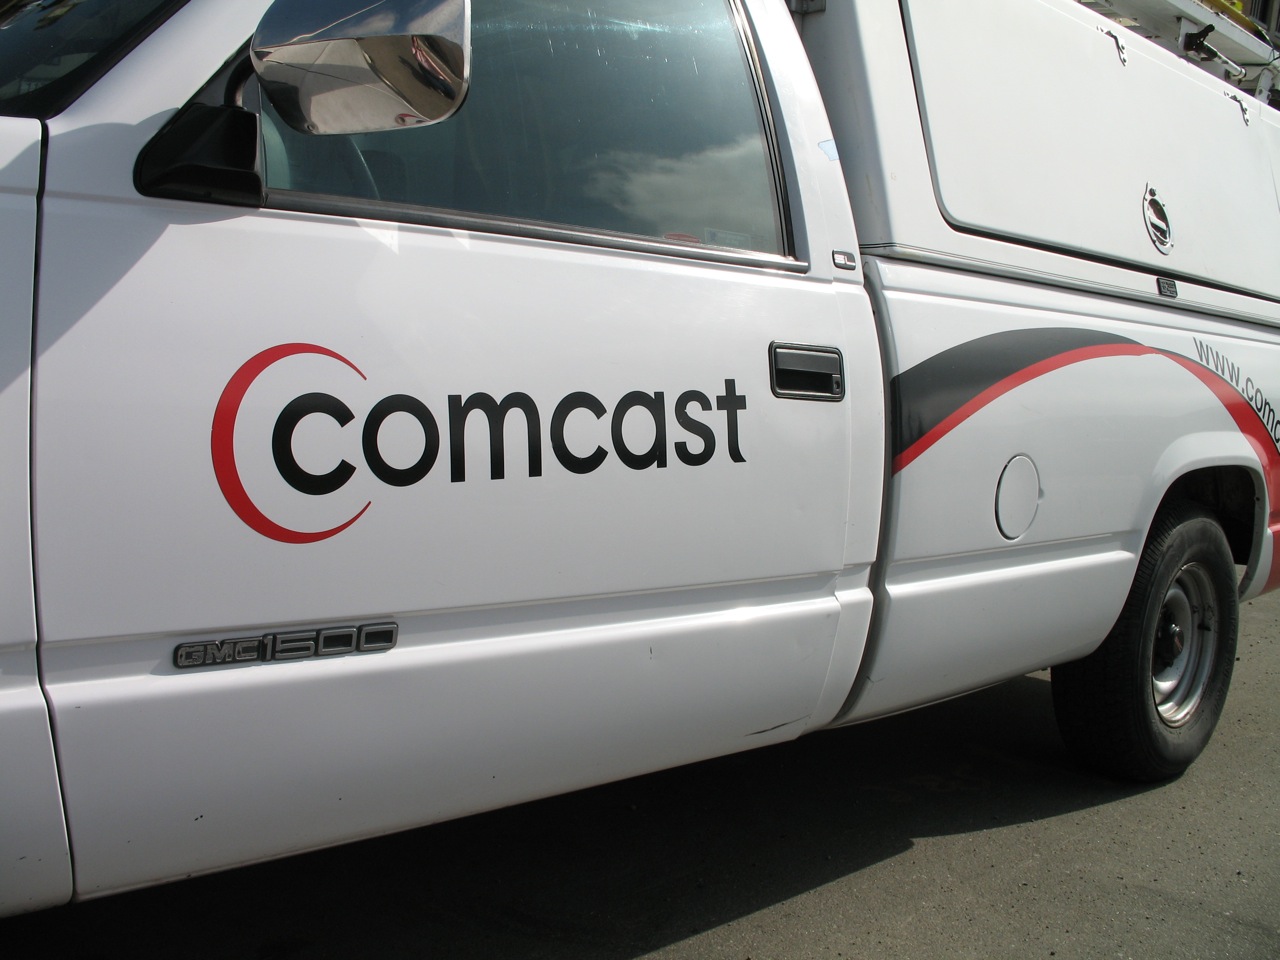 Comcast service truck